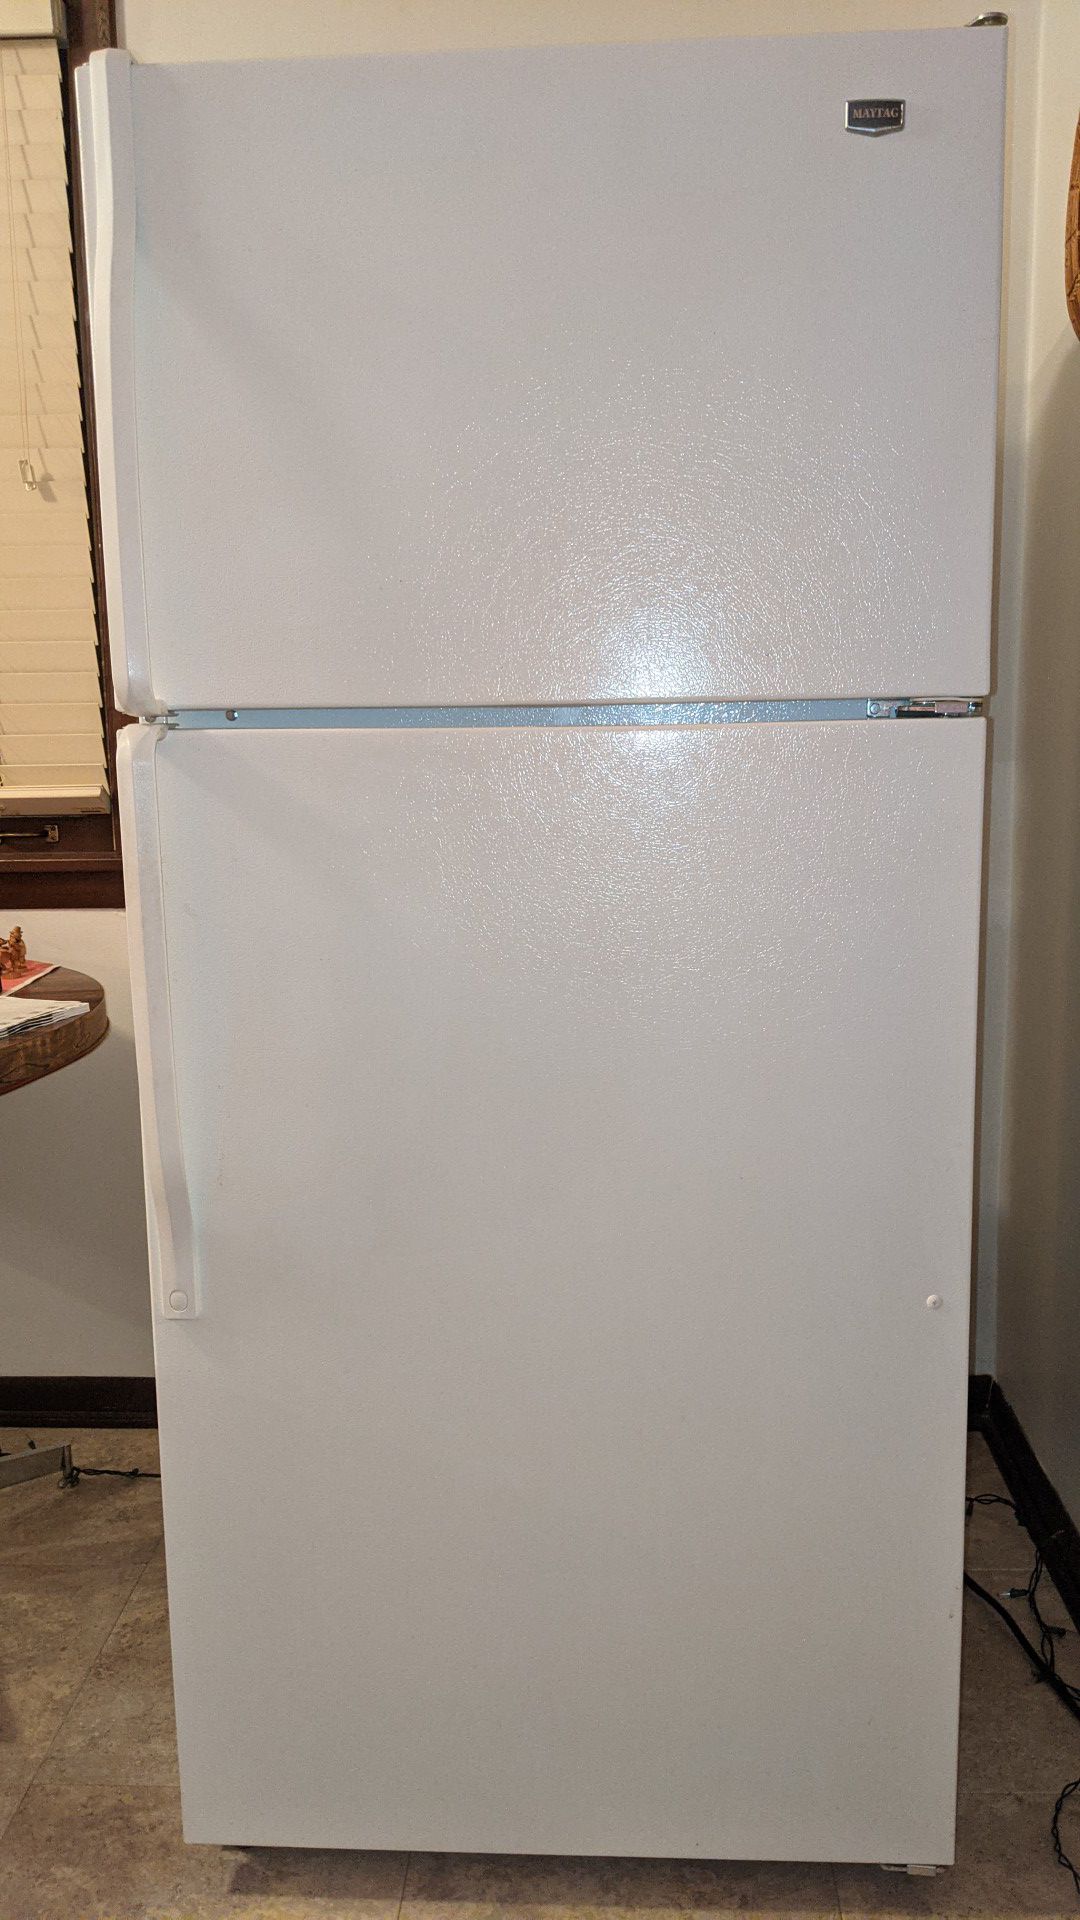 Maytag Refrigerator, fantastic condition